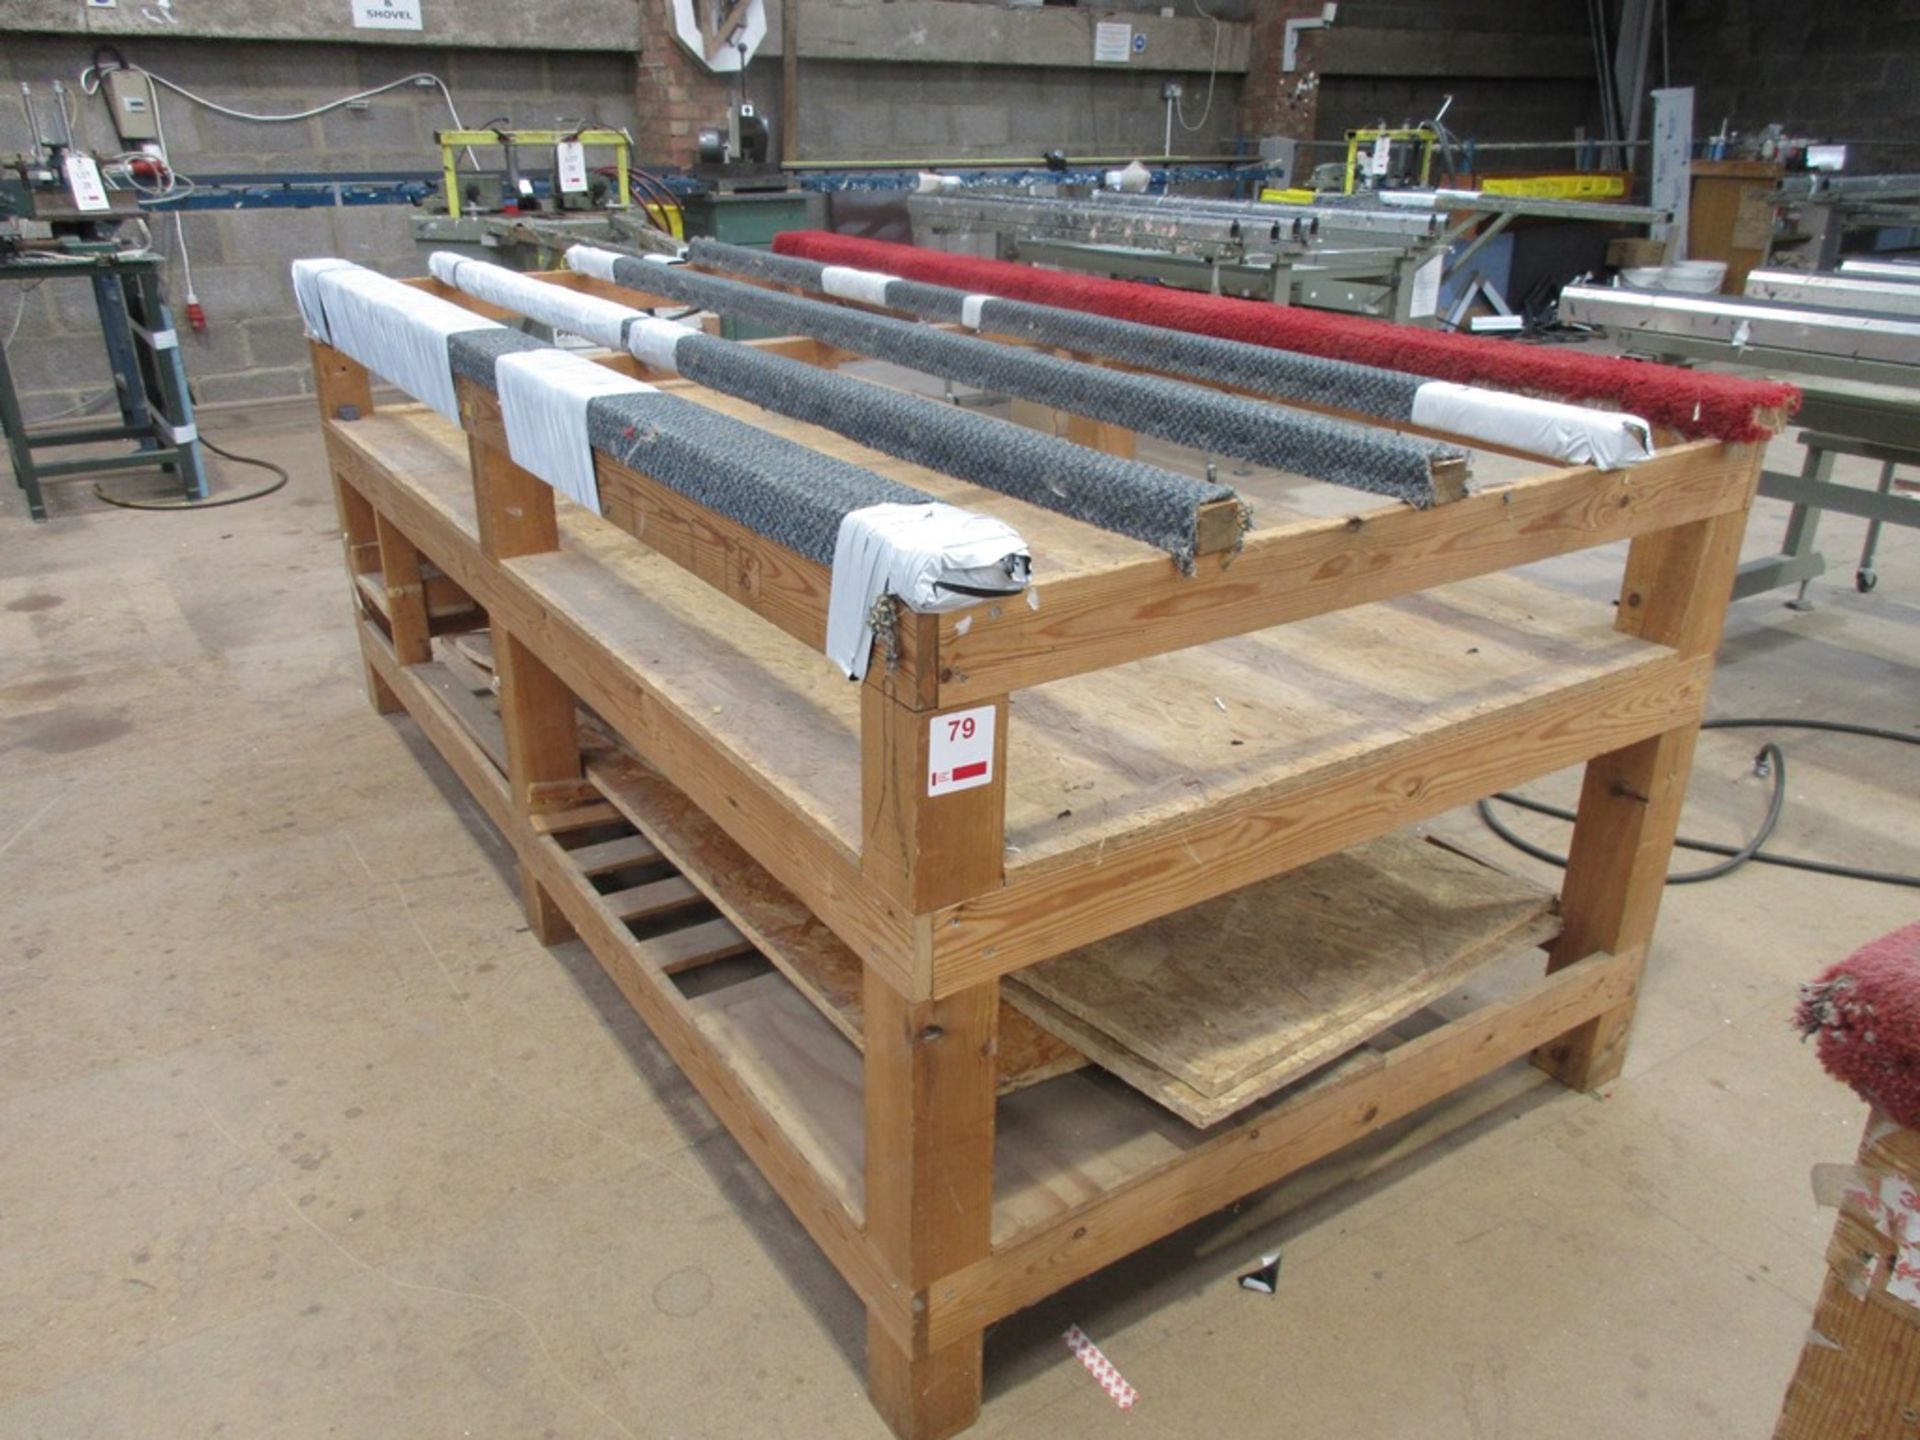 Timber frame work bench, 2.5m x 1.2m